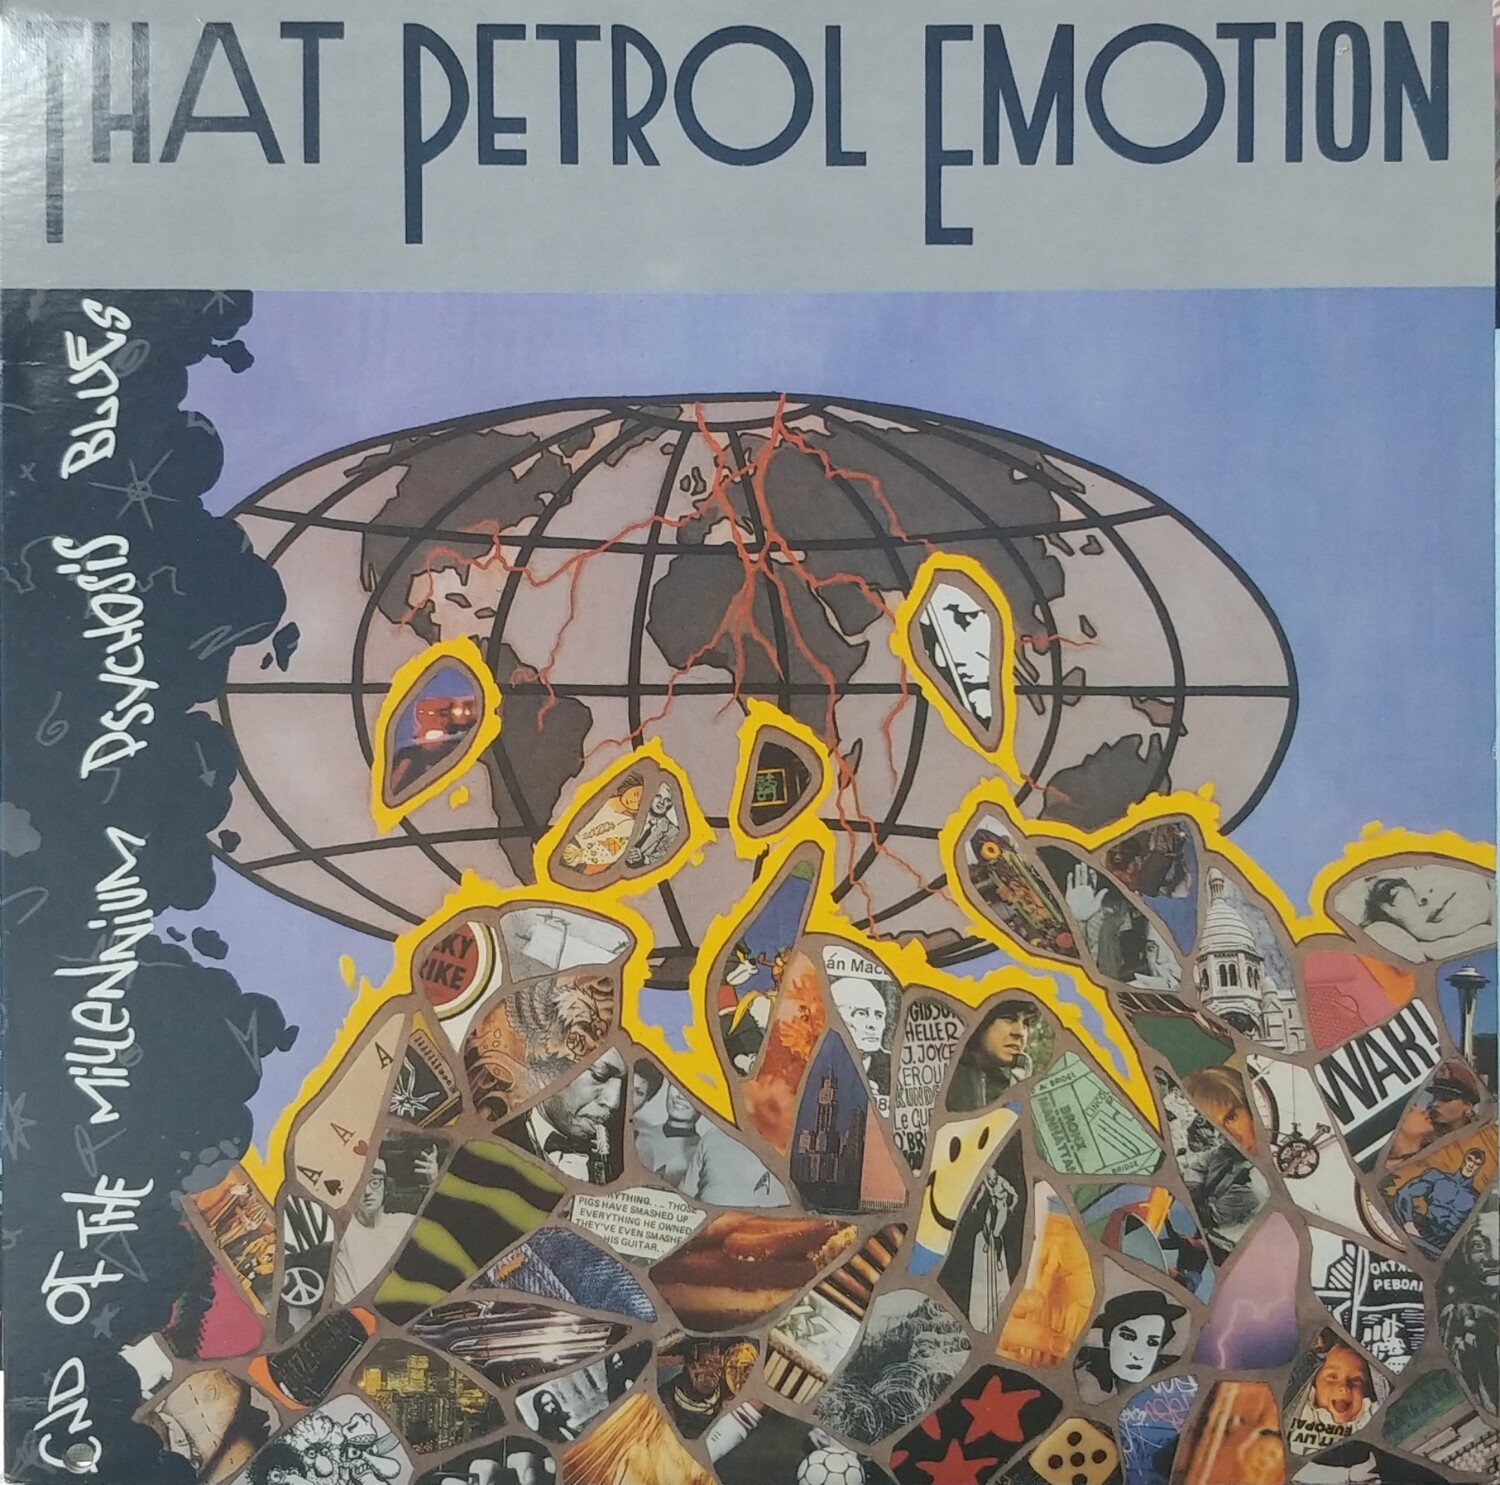 That Petrol Emotion - End of the millennium Psychose blues